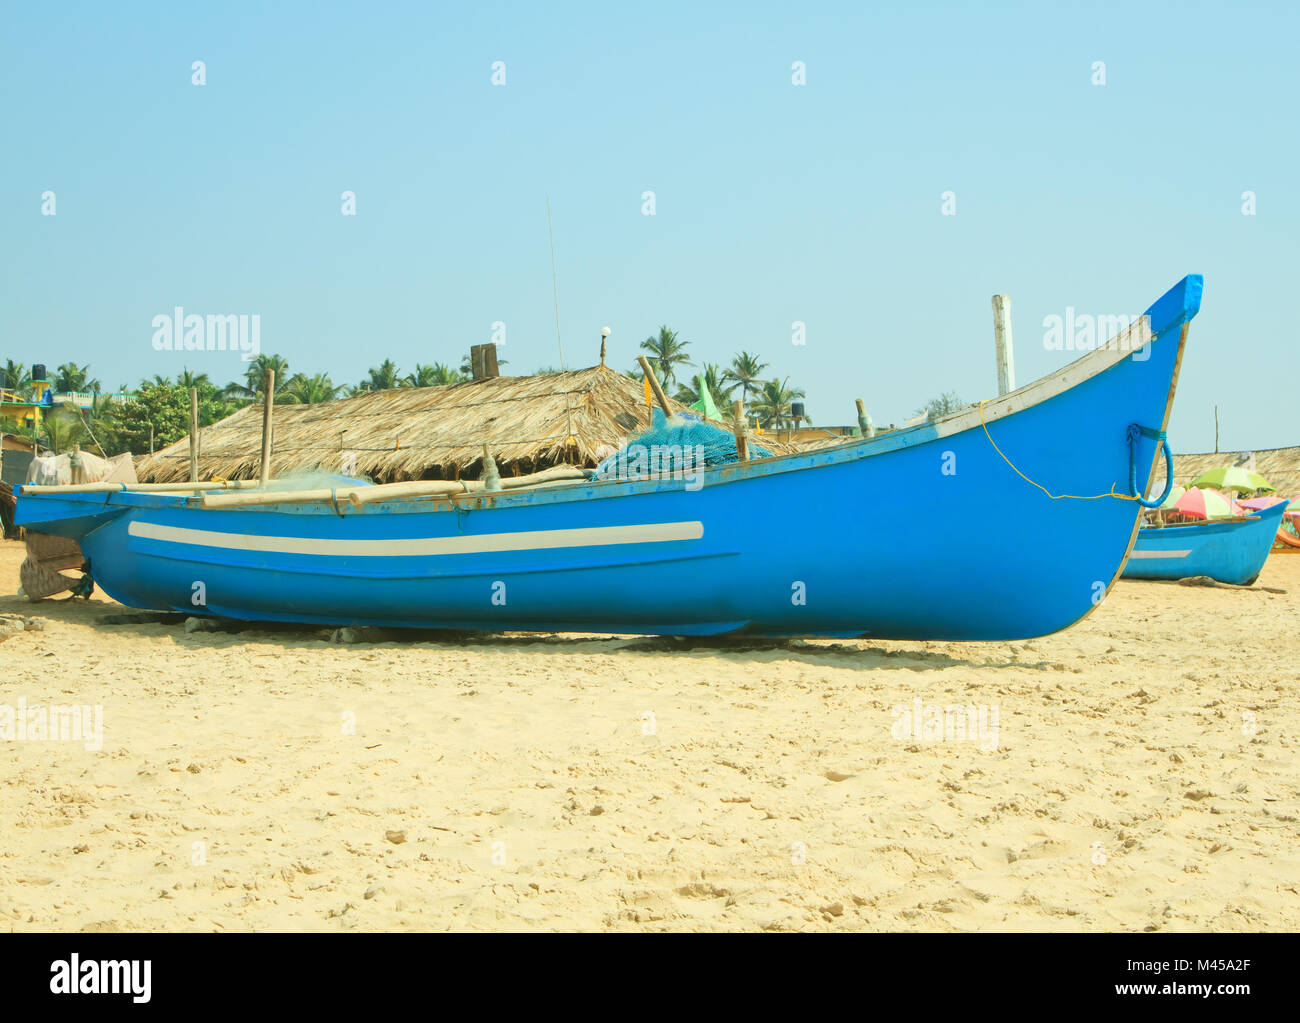 Fishing boat on the beach Stock Photo